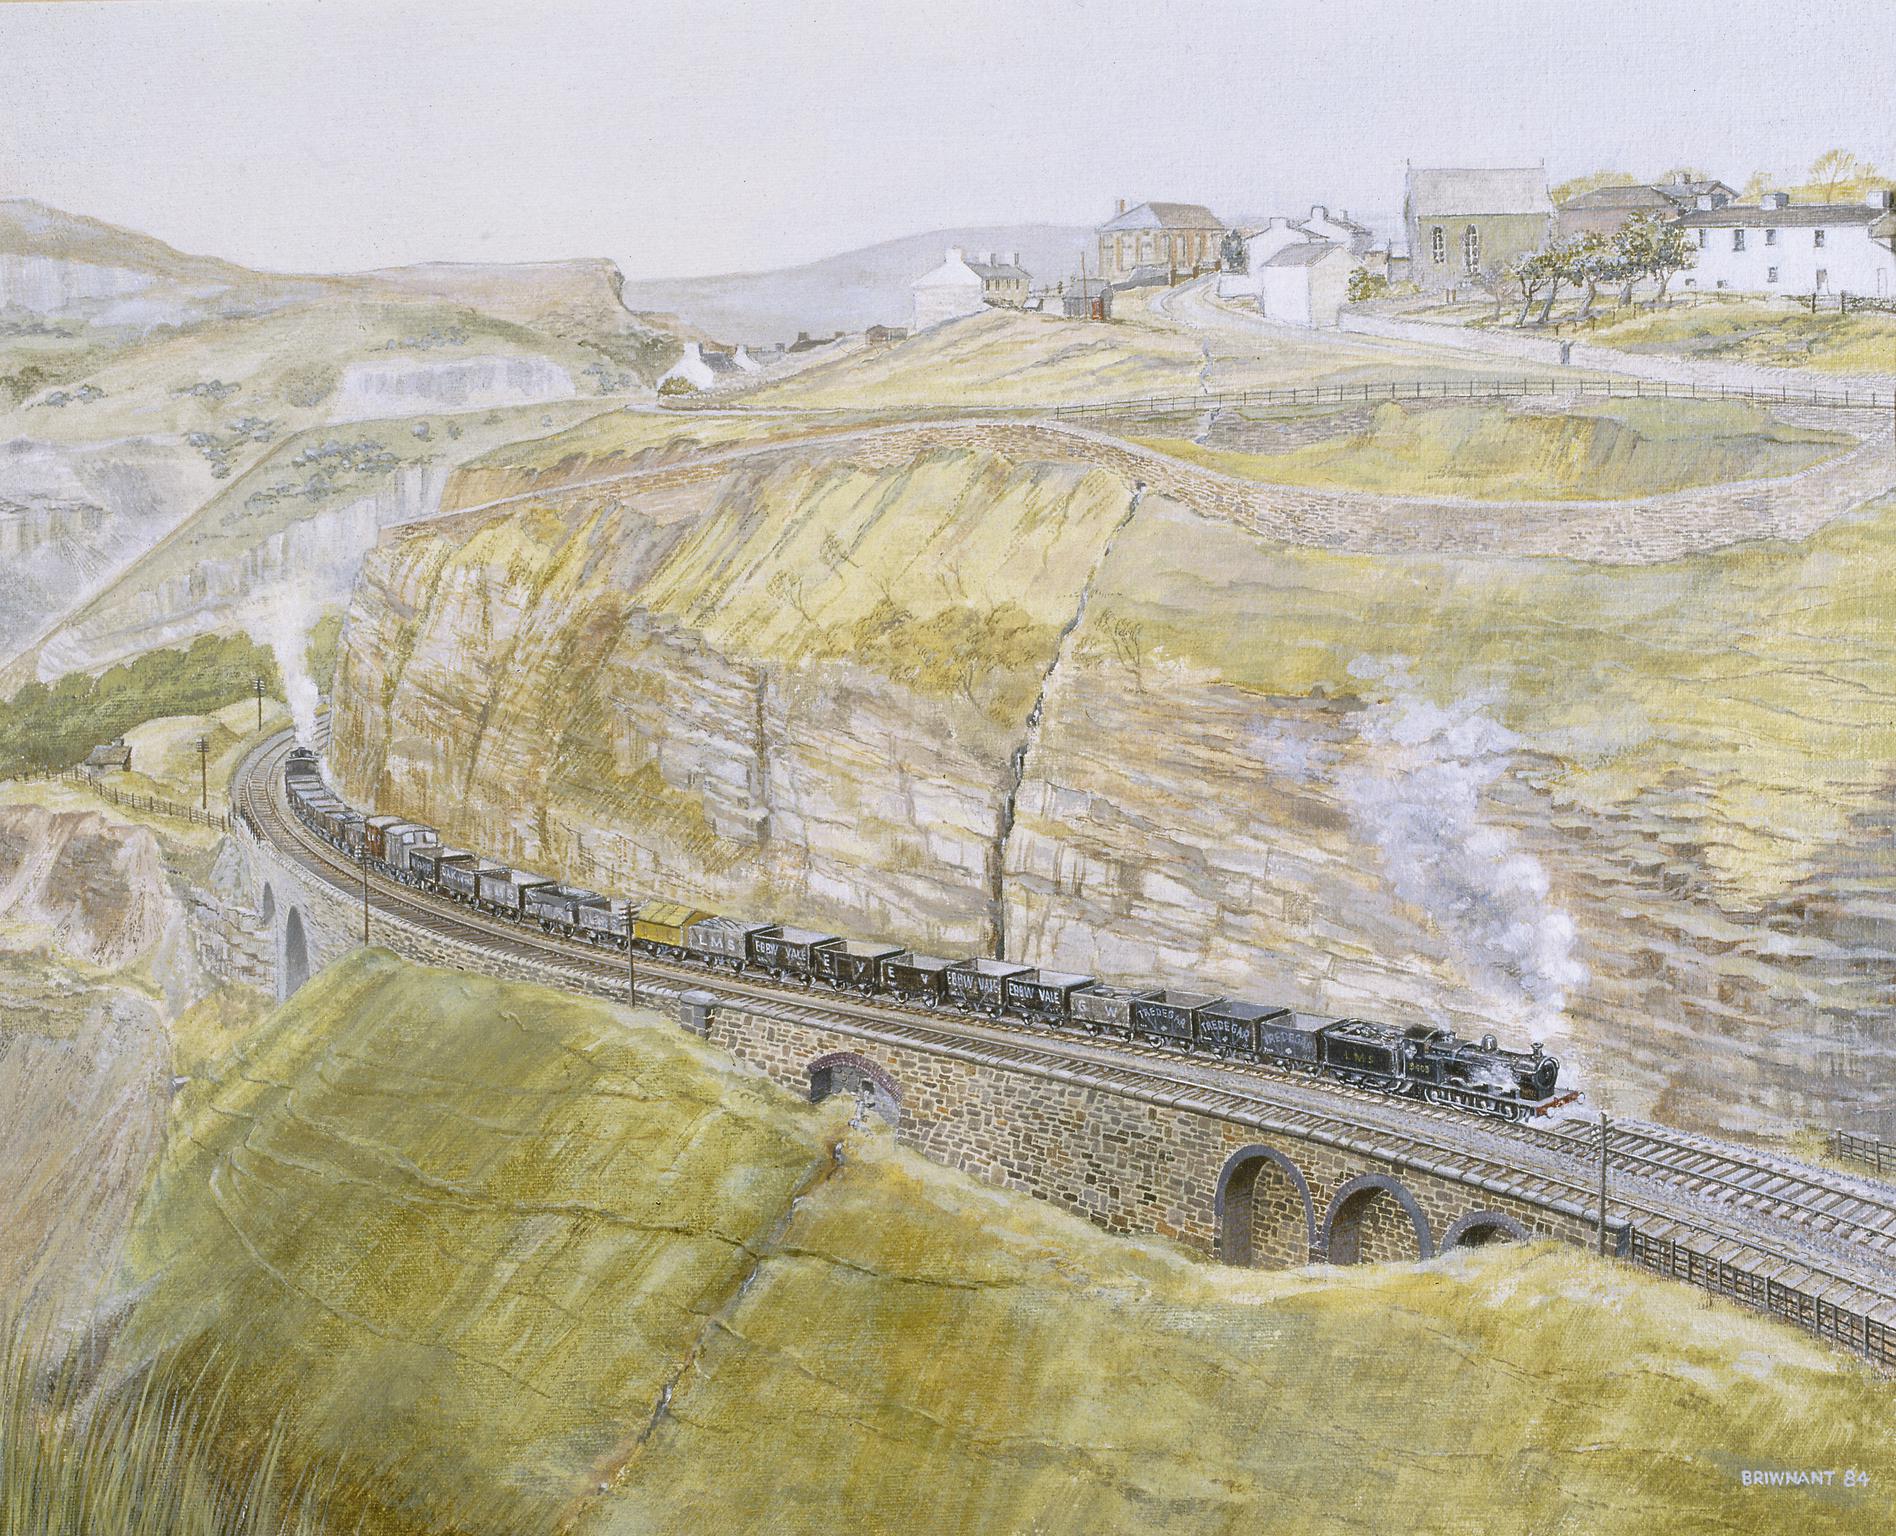 Clydach Gorge, Gelli Felen (painting)